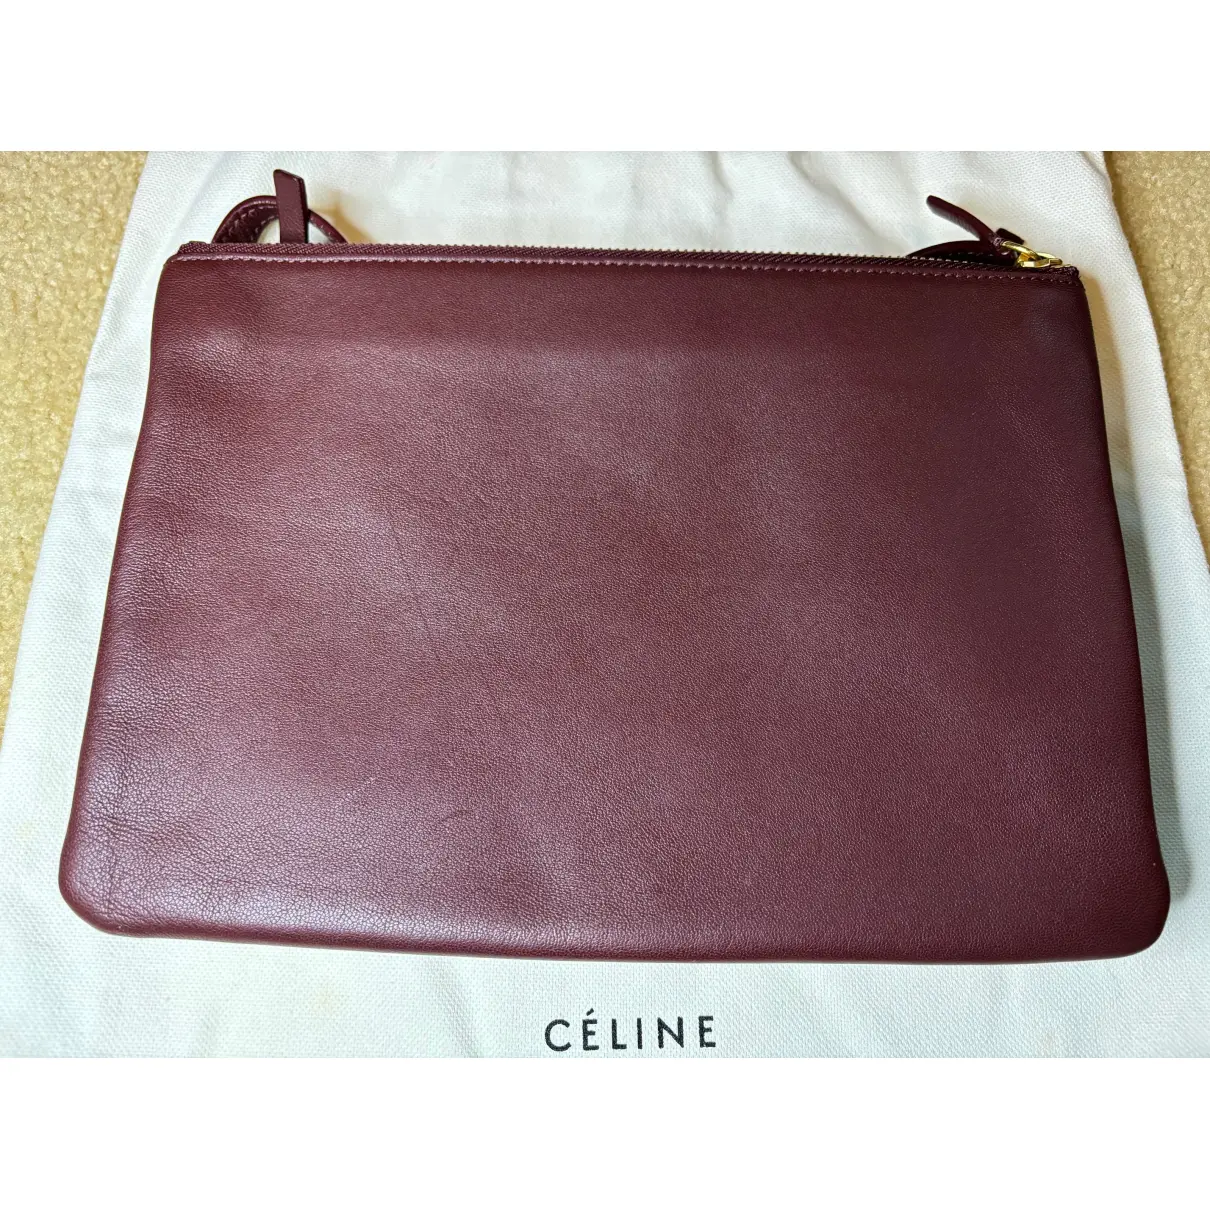 Buy Celine Trio leather backpack online